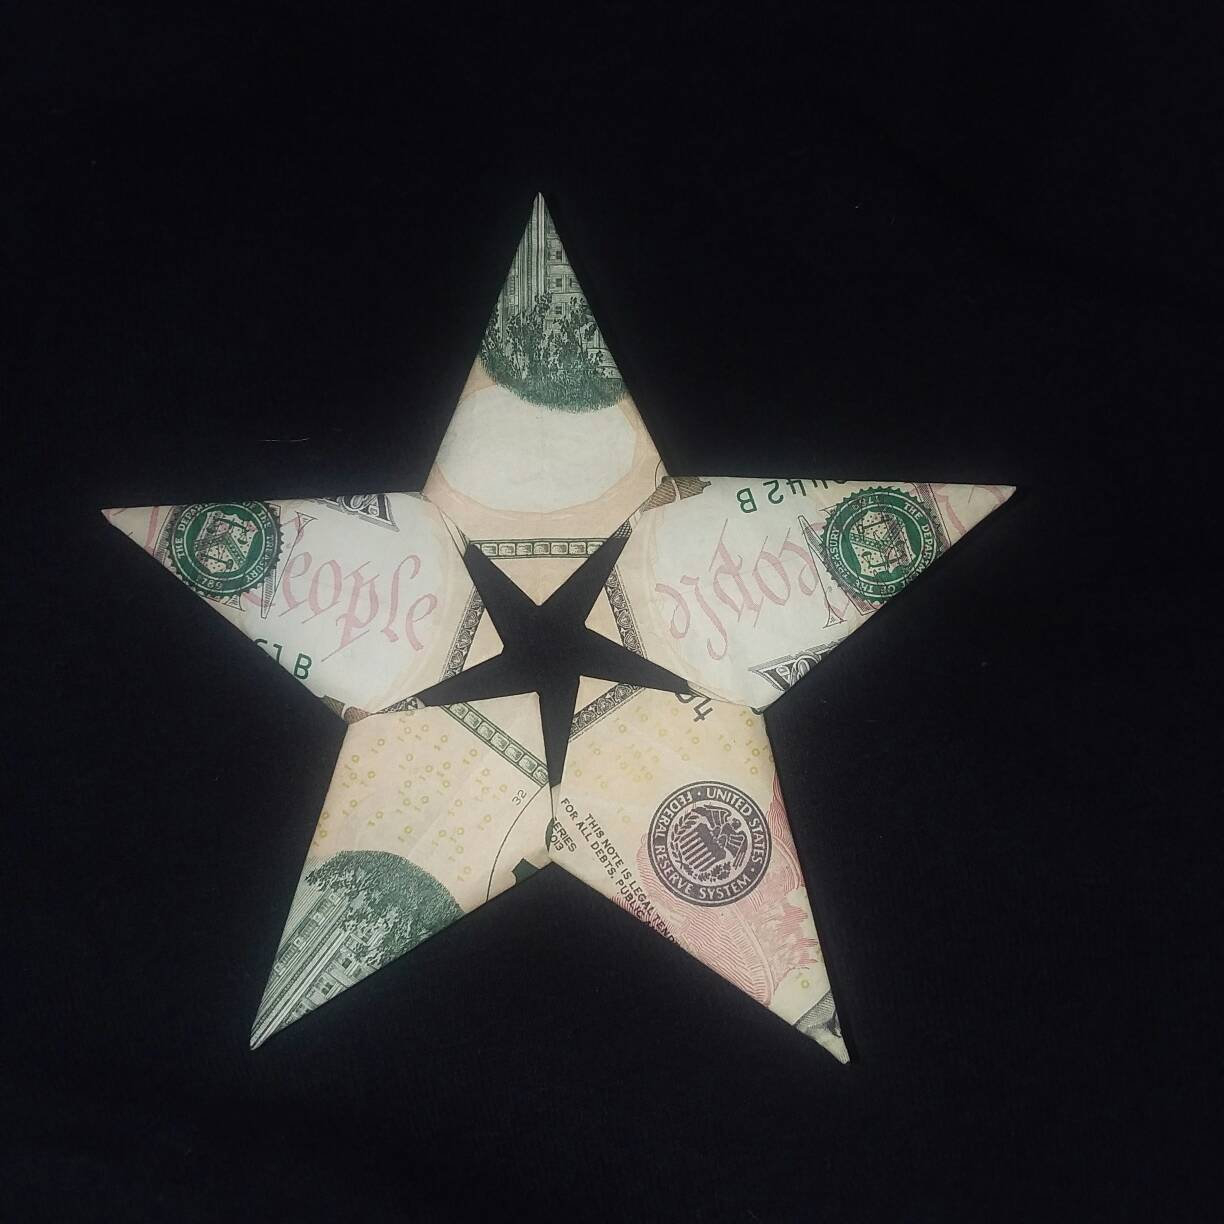 Origami Four Leaf Clover Dollar Bill Money Origami 5 Point Star Five Real Us Dollar Bills Folded Into Star Gift